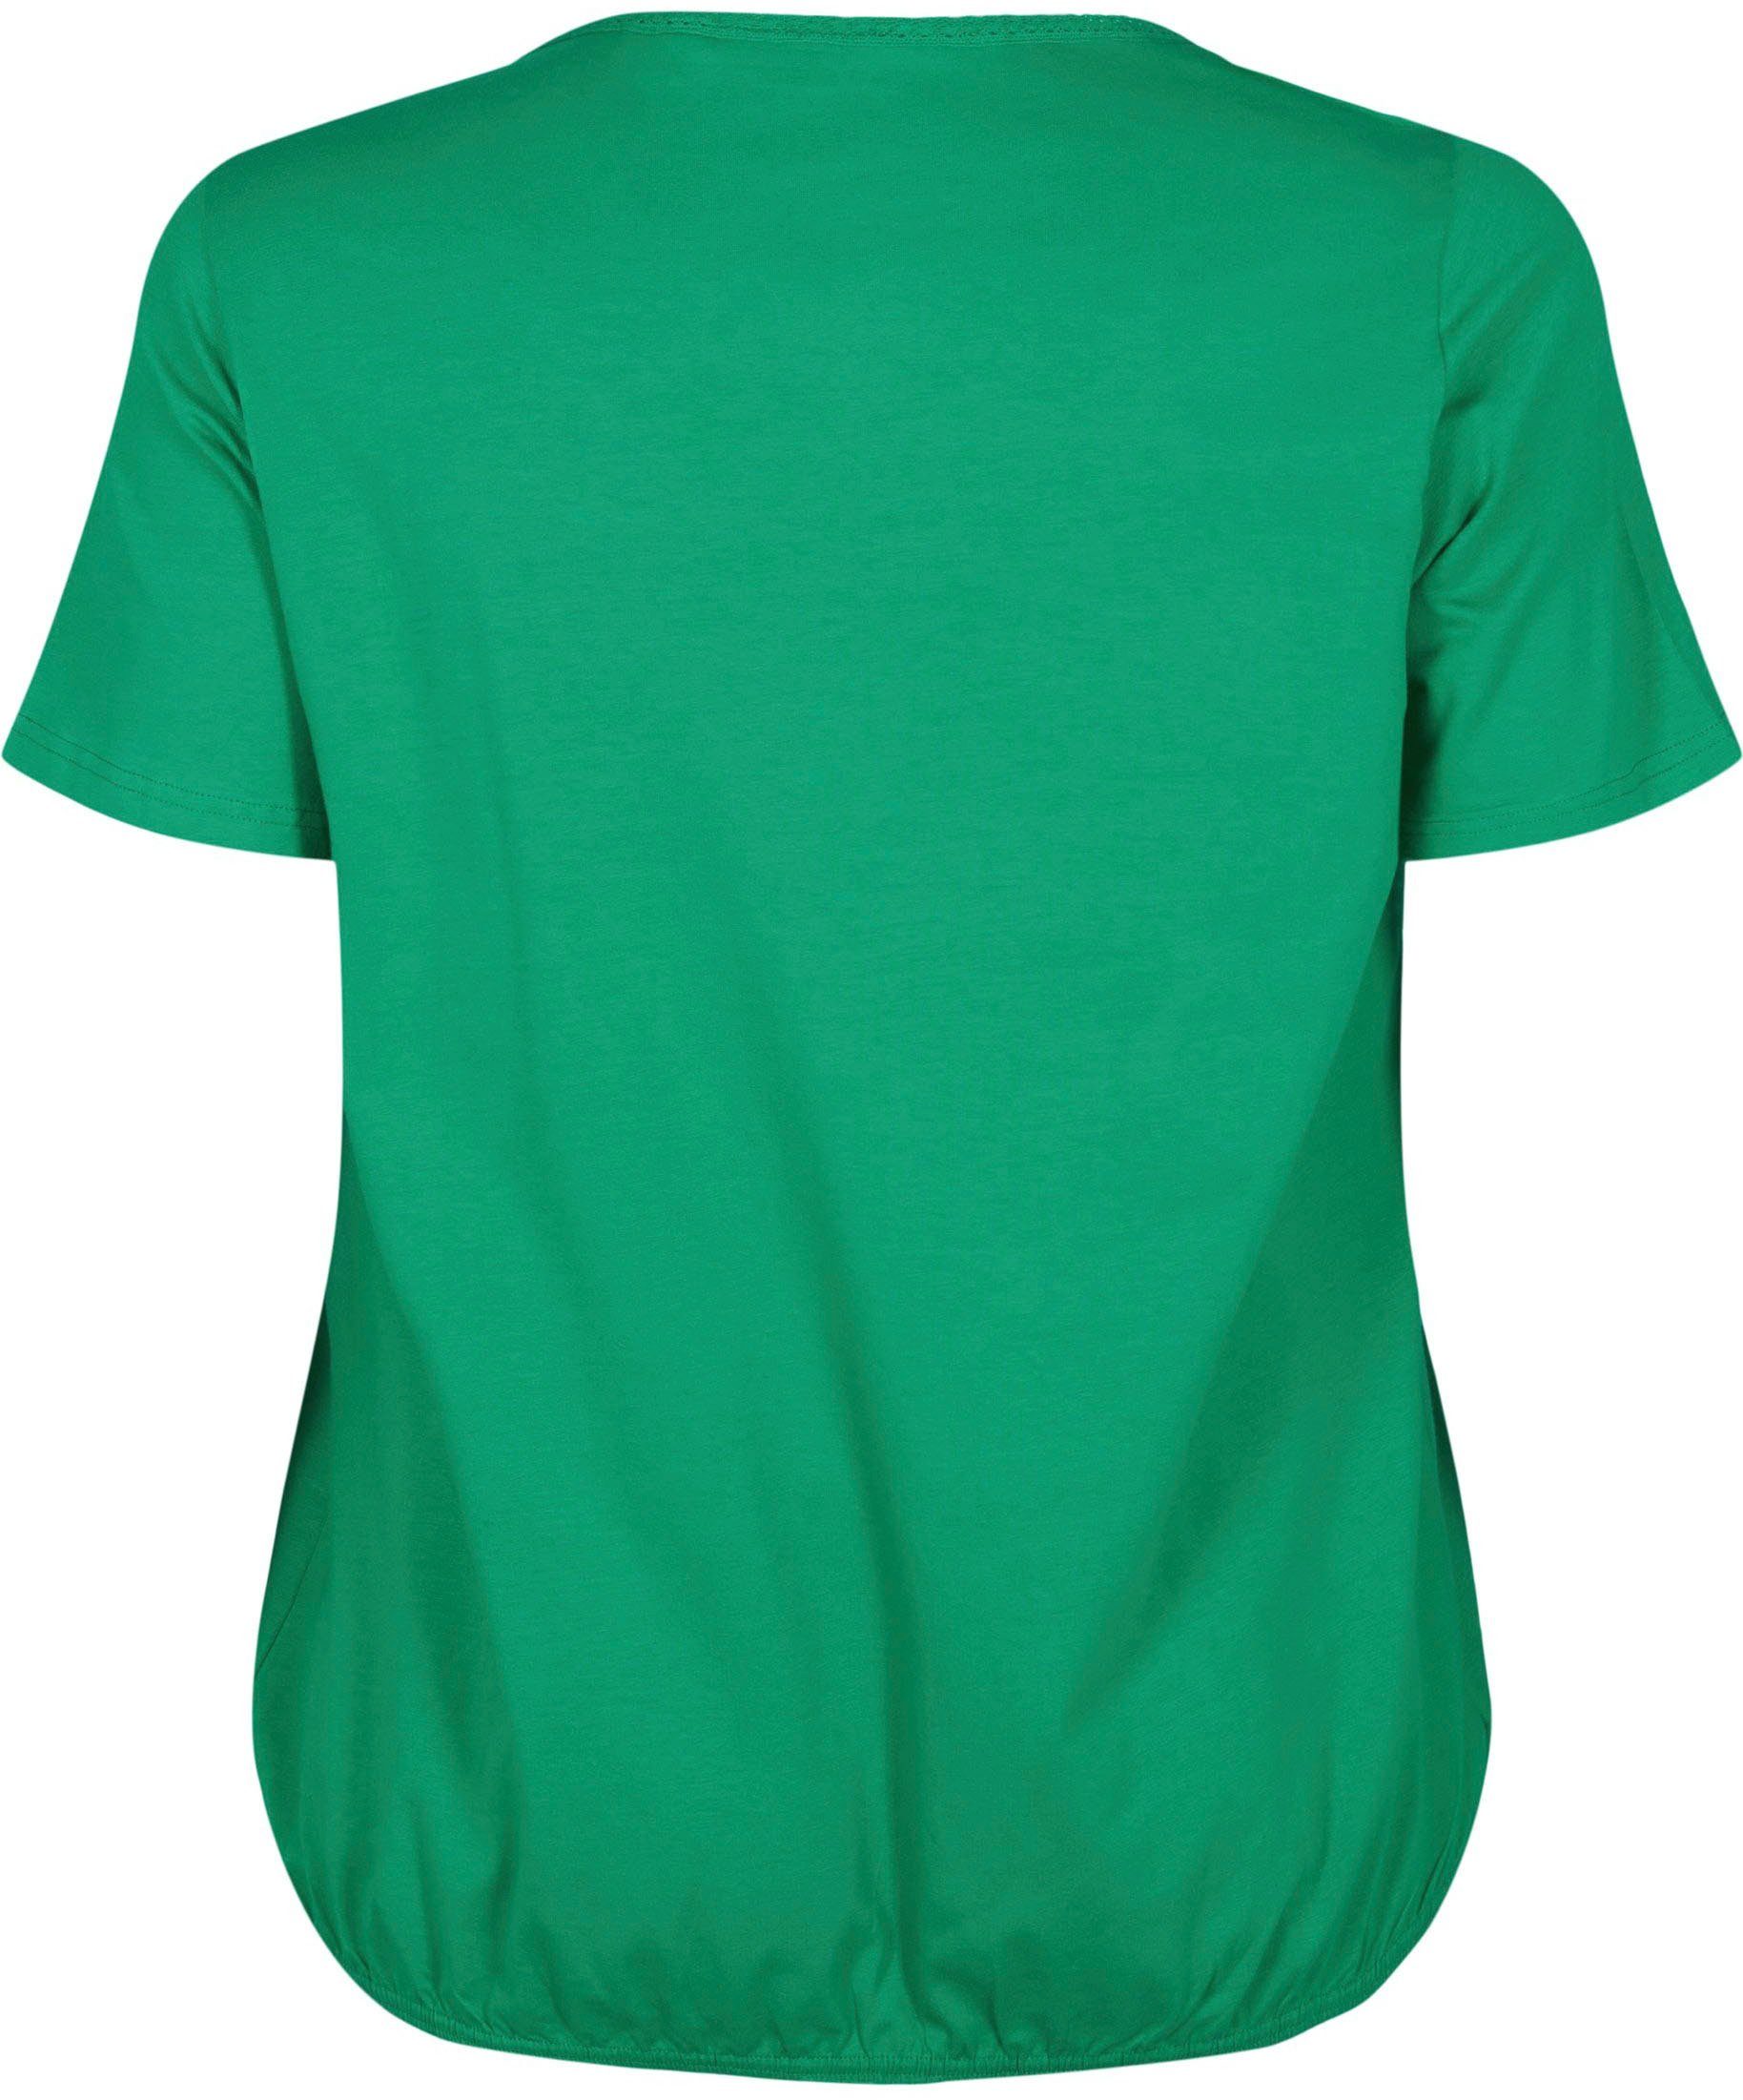 Zizzi T-Shirt Zizzi VPOLLY green jolly